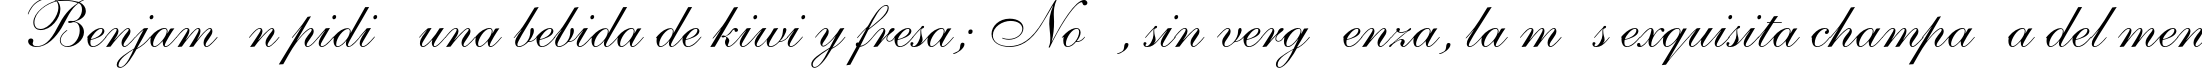 Пример написания шрифтом AllegroScript Italic текста на испанском